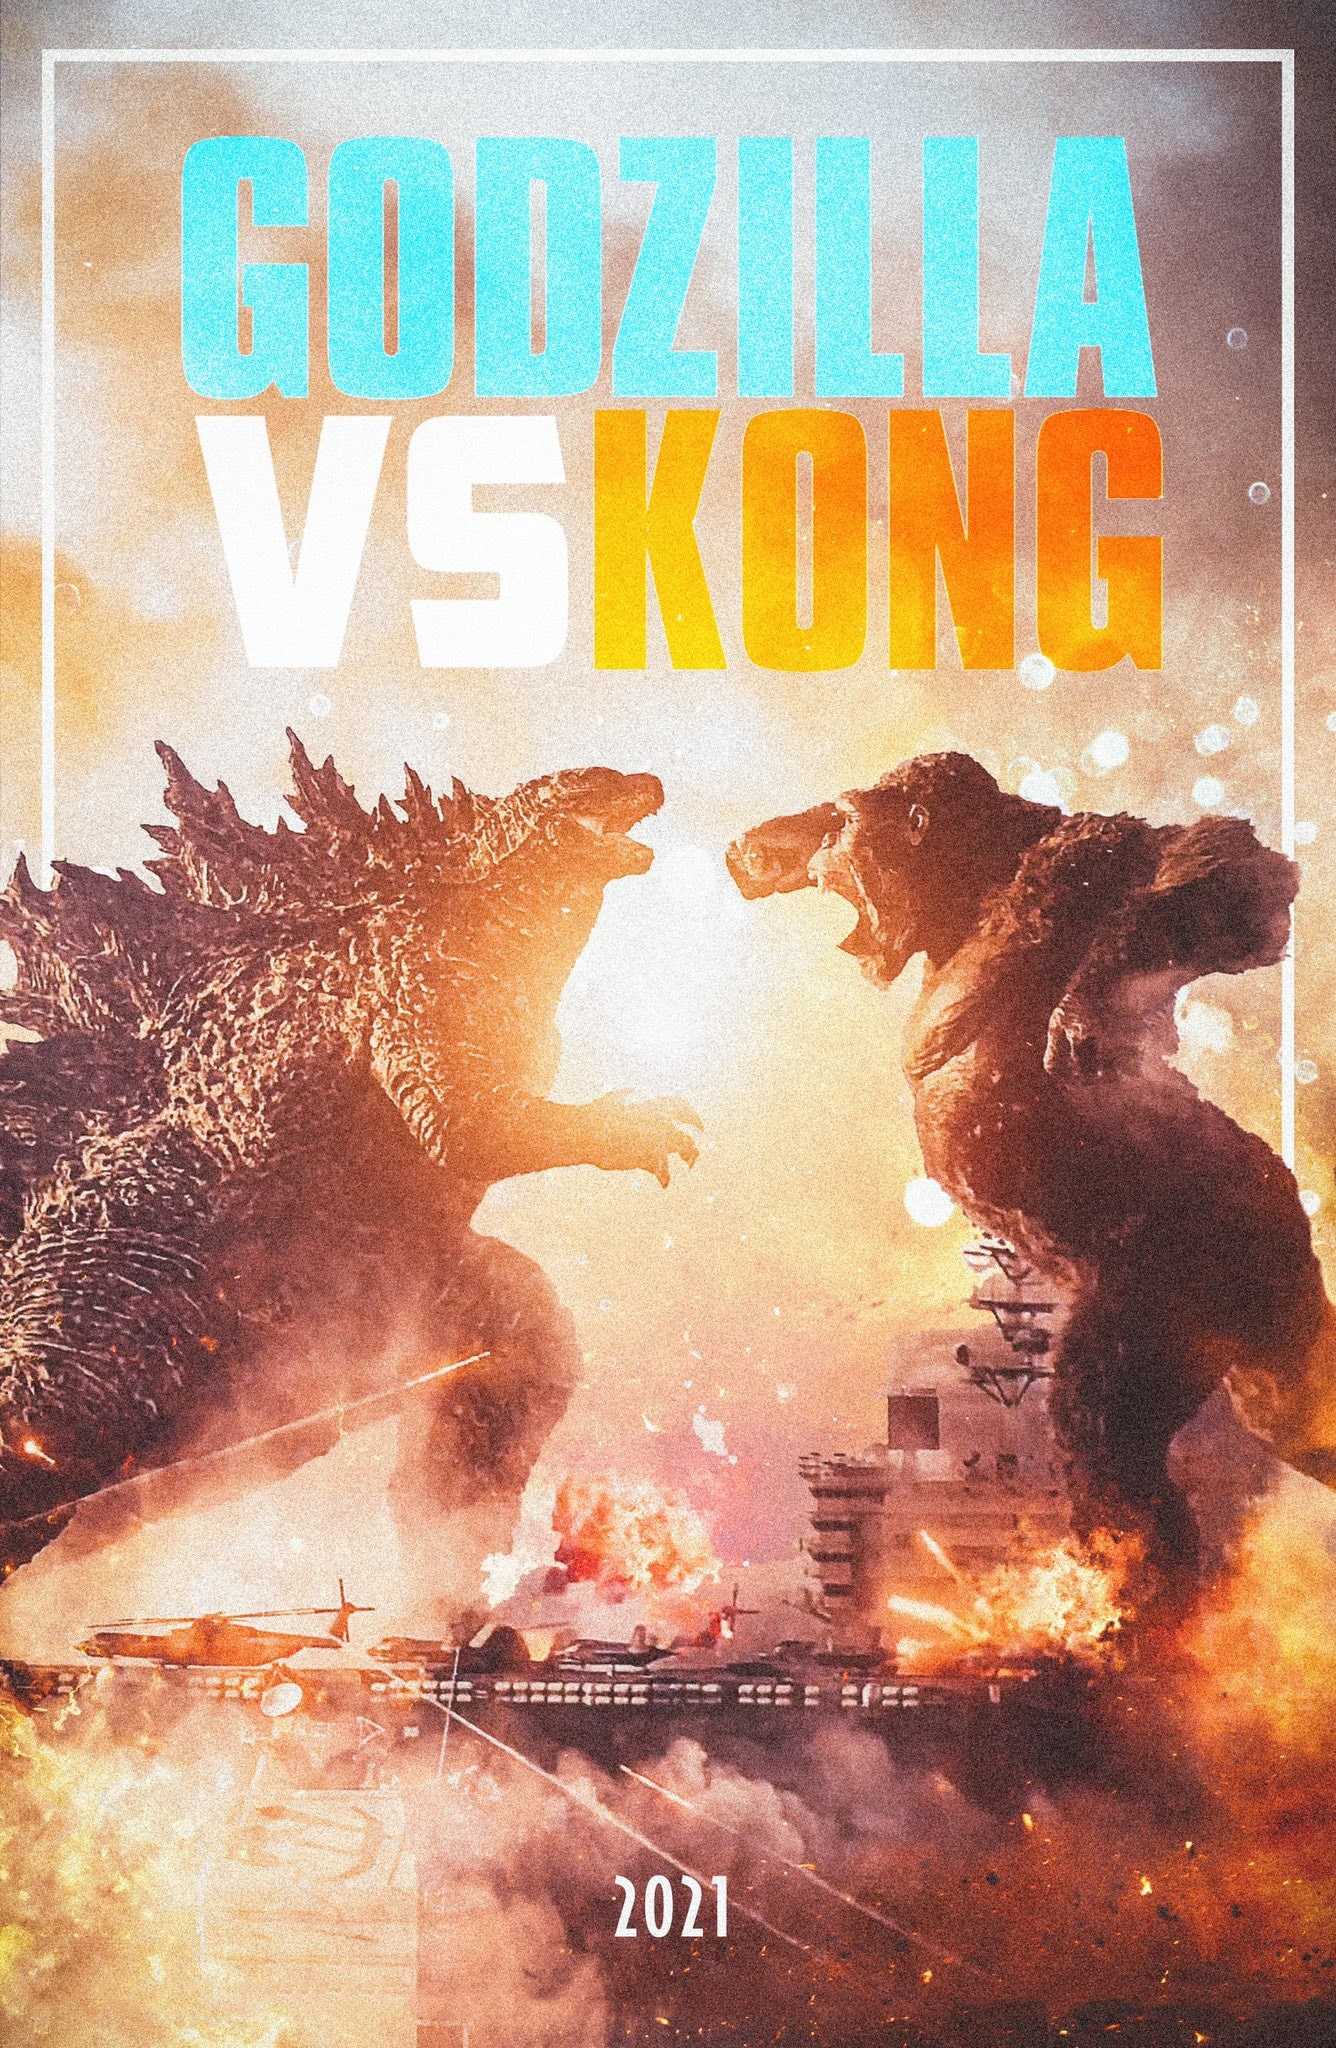 21 Godzilla Vs Kong Wallpaper Kolpaper Awesome Free Hd Wallpapers